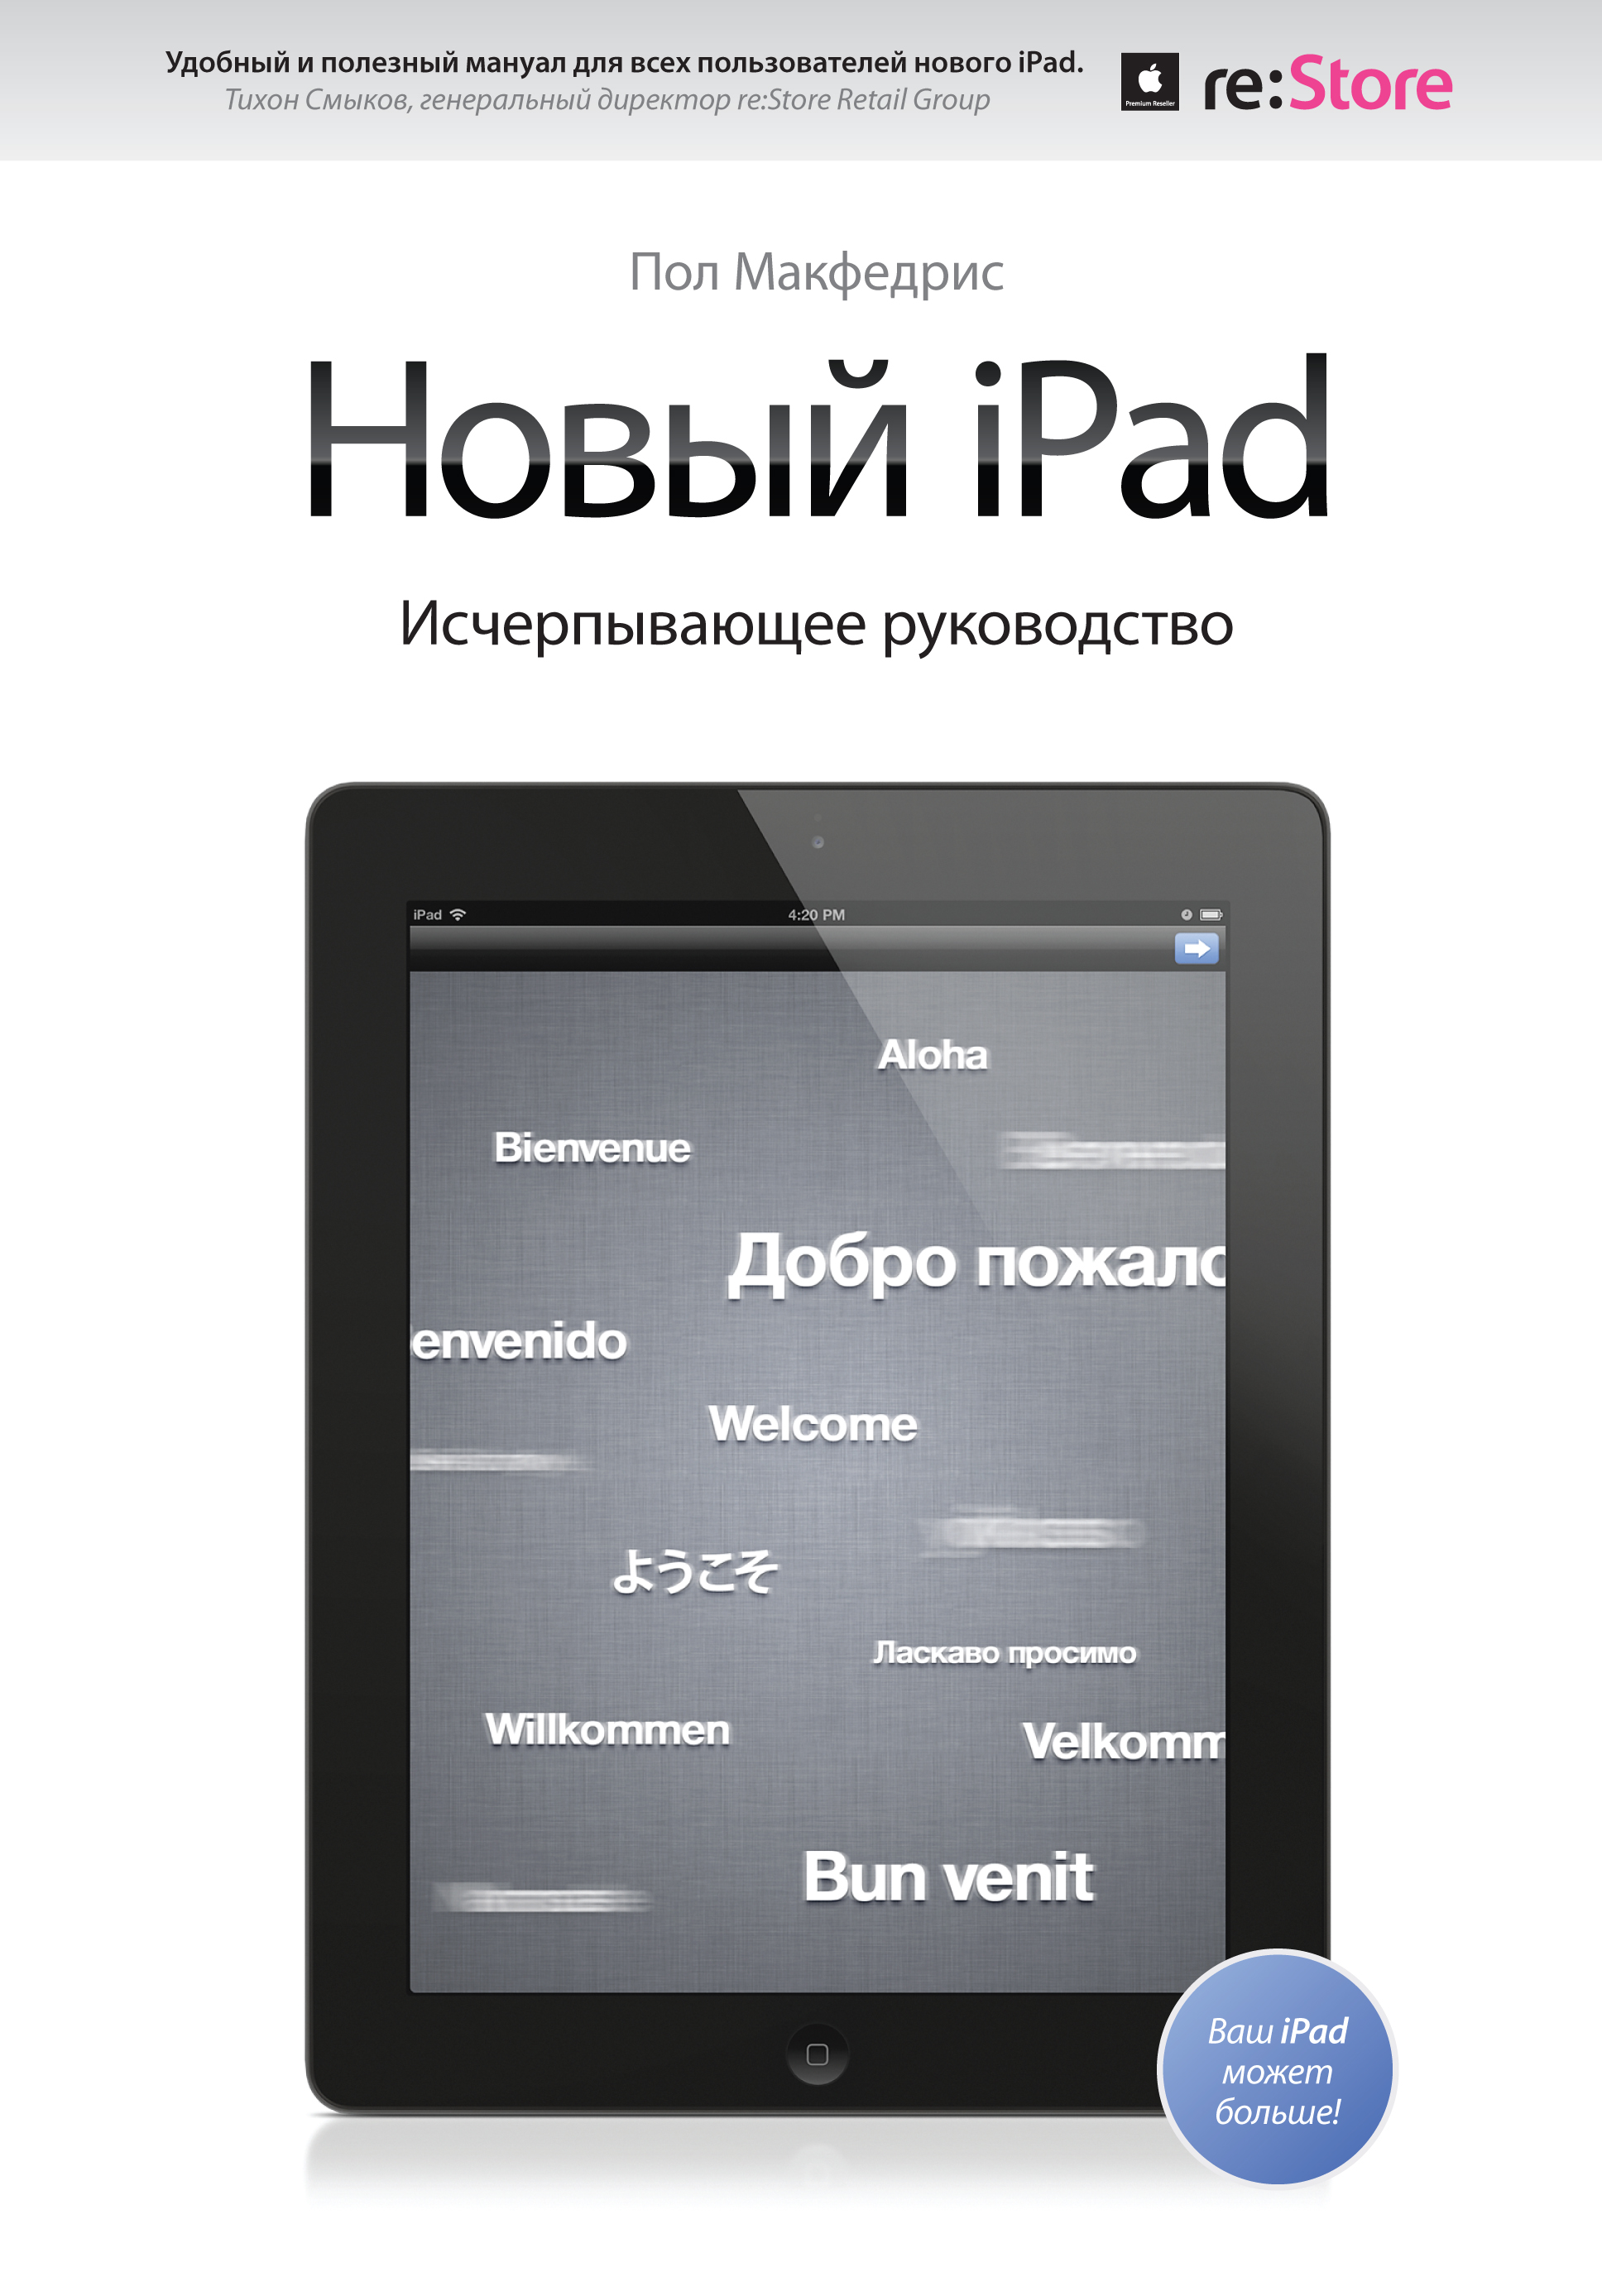 макфедрис пол ipad 2 исчерпывающее руководство МакФедрис Пол Новый iPad. Исчерпывающее руководство